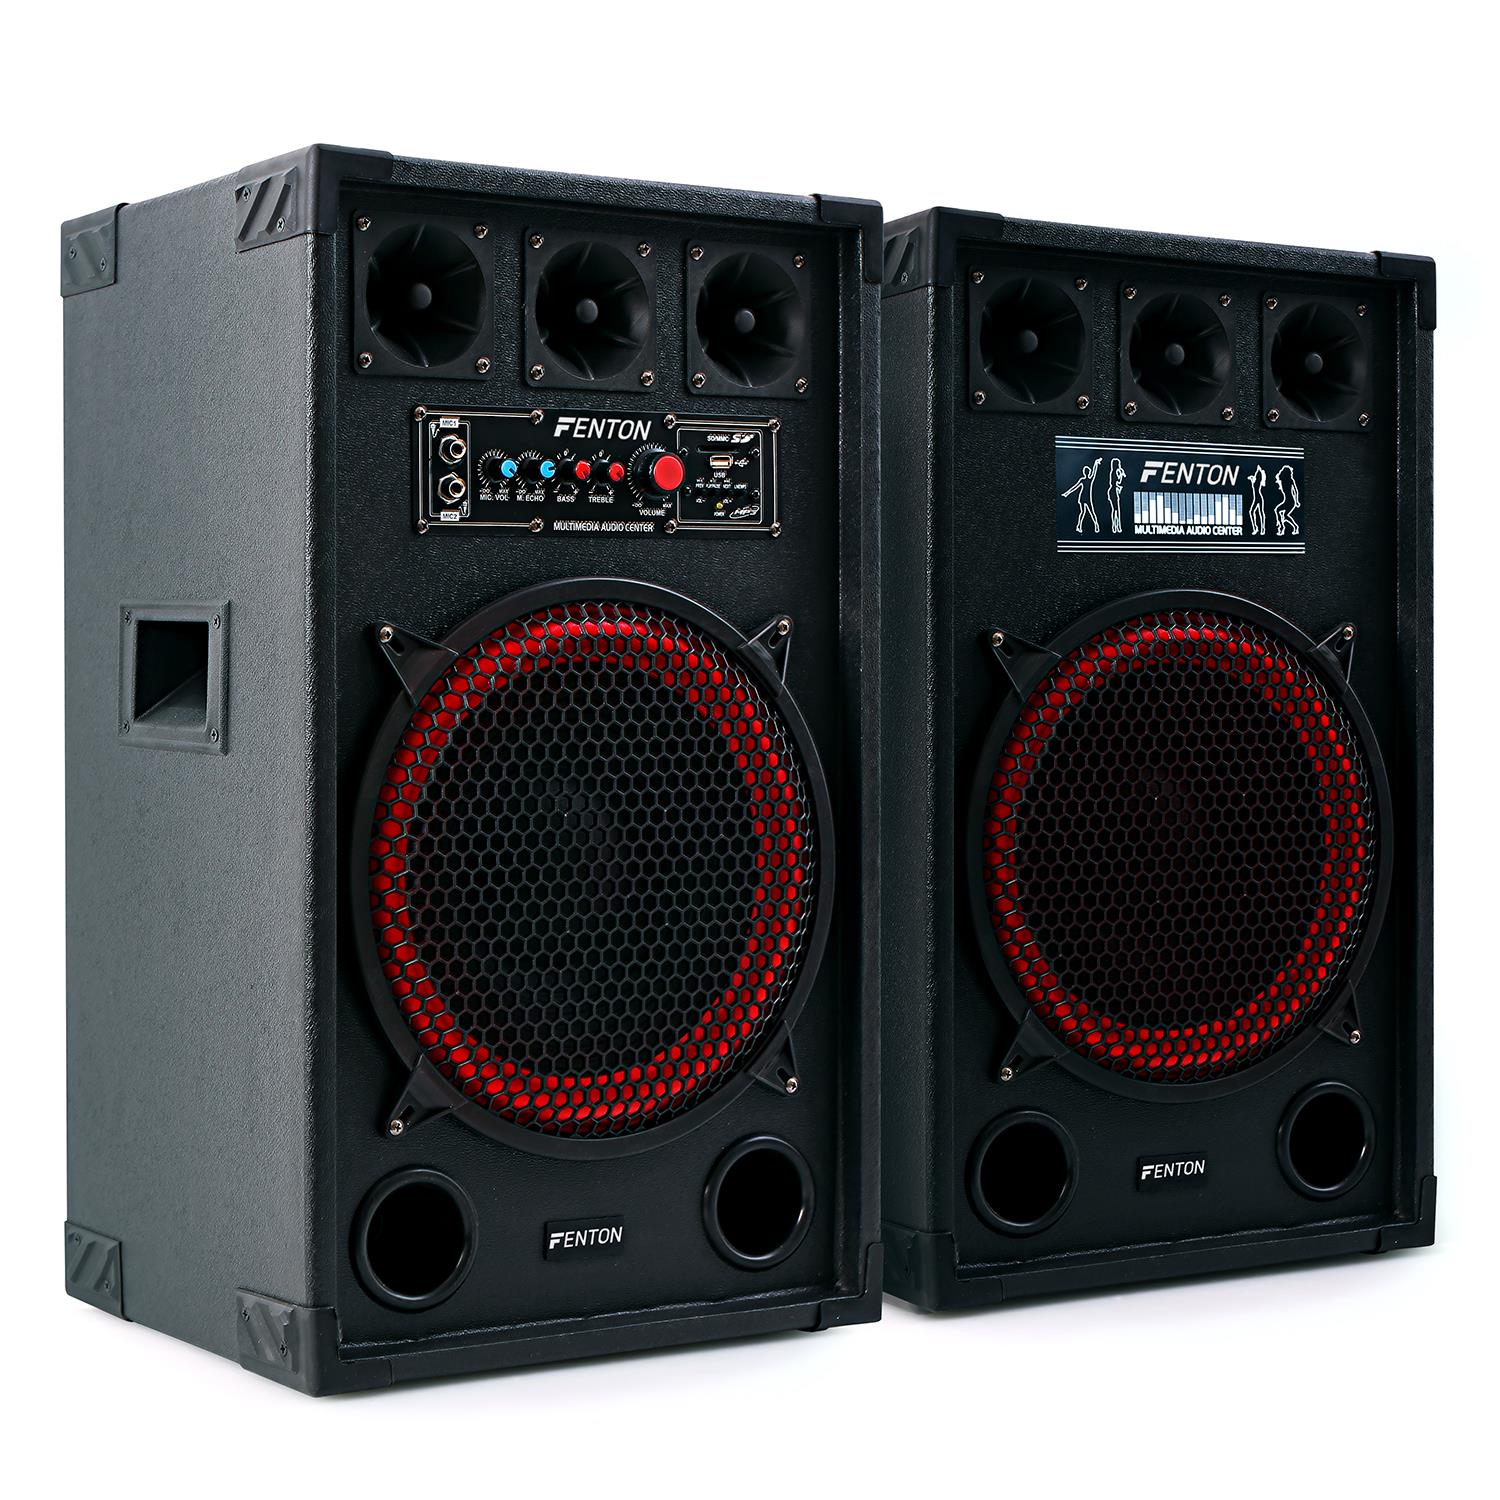 Retourdeal - Fenton SPB-12 actieve speakerset 12" 800W met Bluetooth